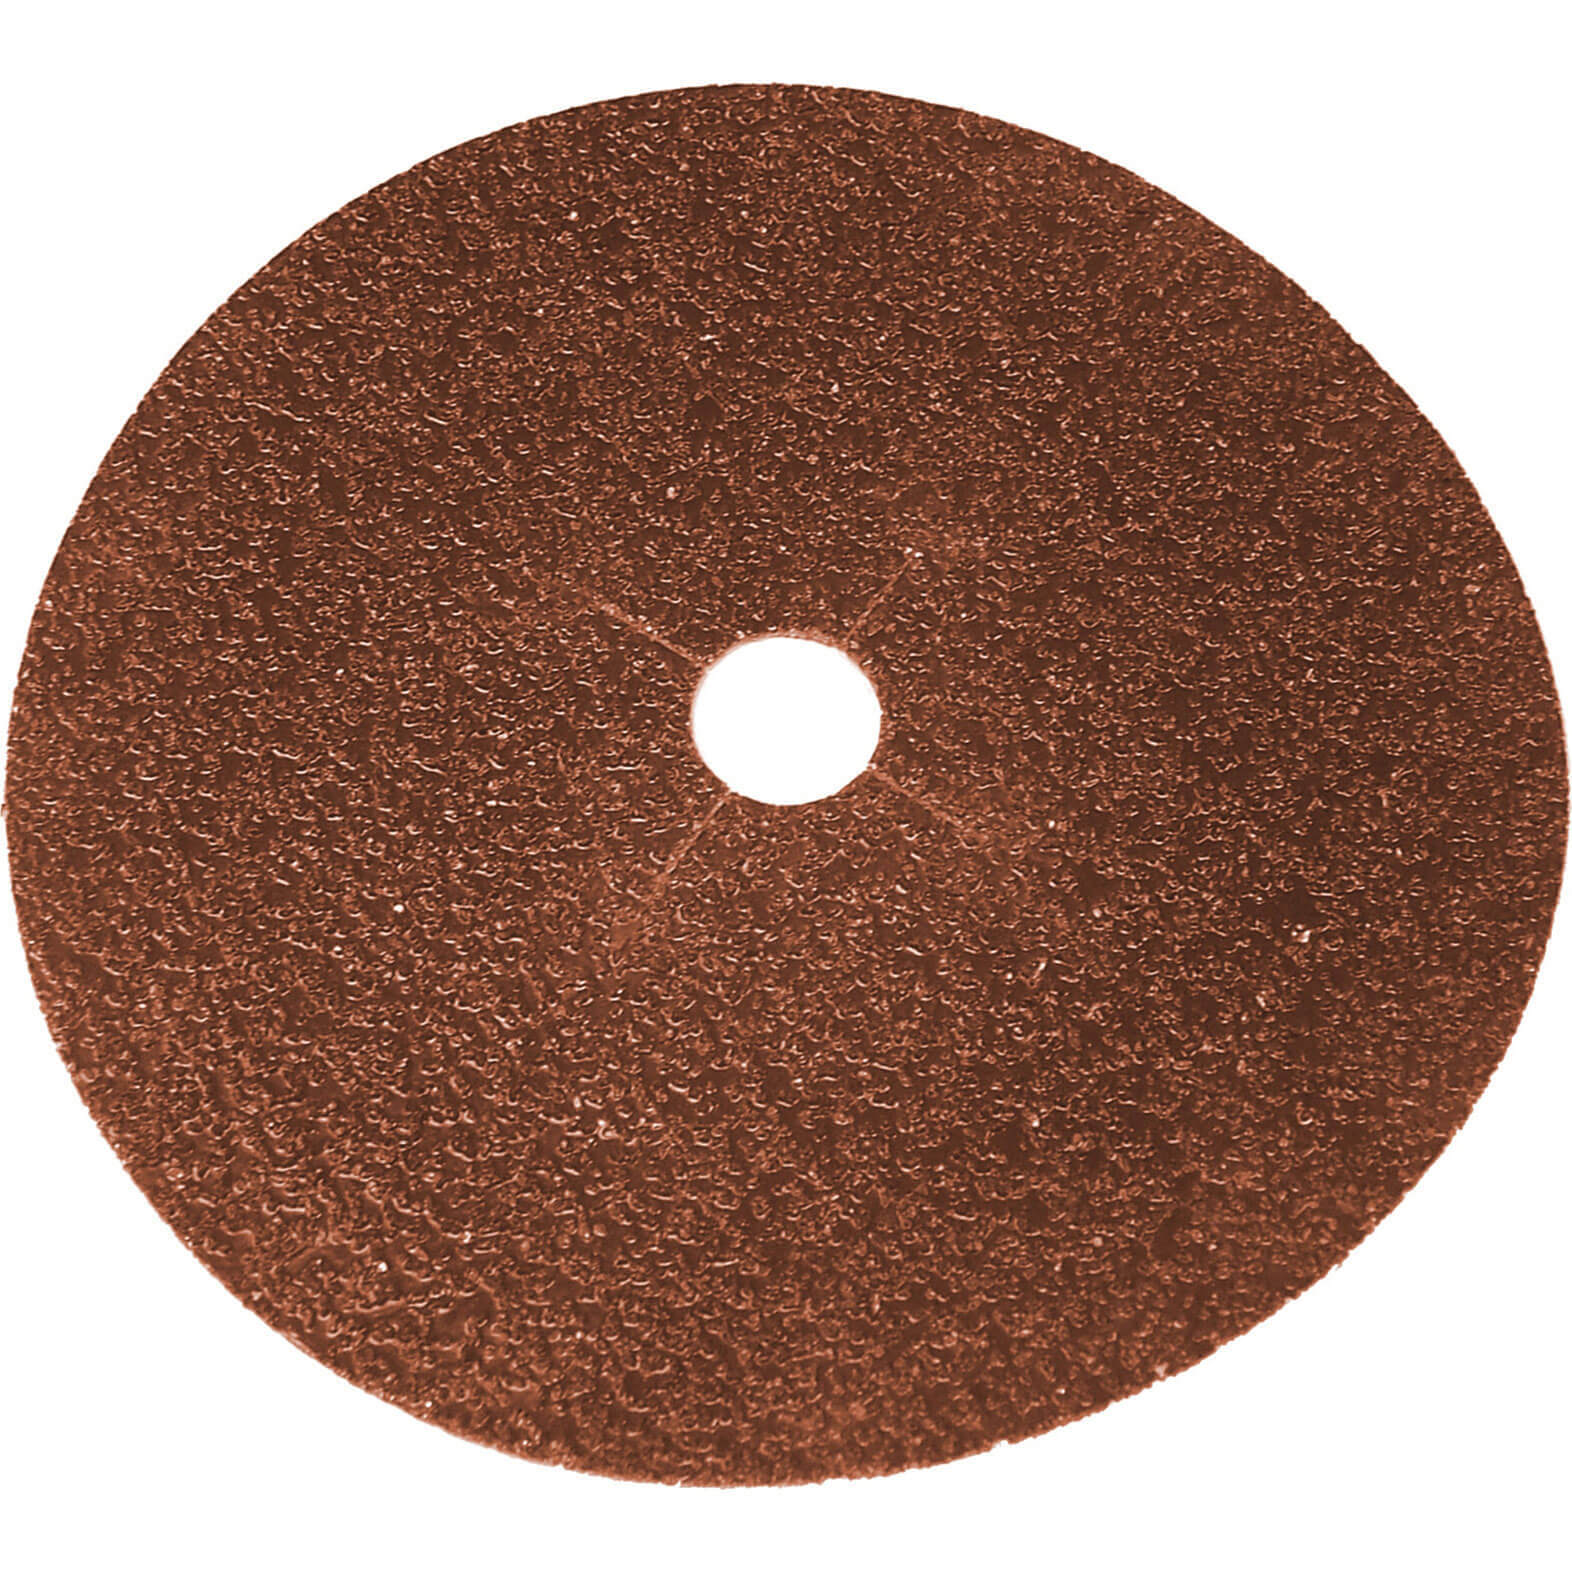 Photo of Faithfull Aluminium Oxide Sanding Discs 178mm 40g